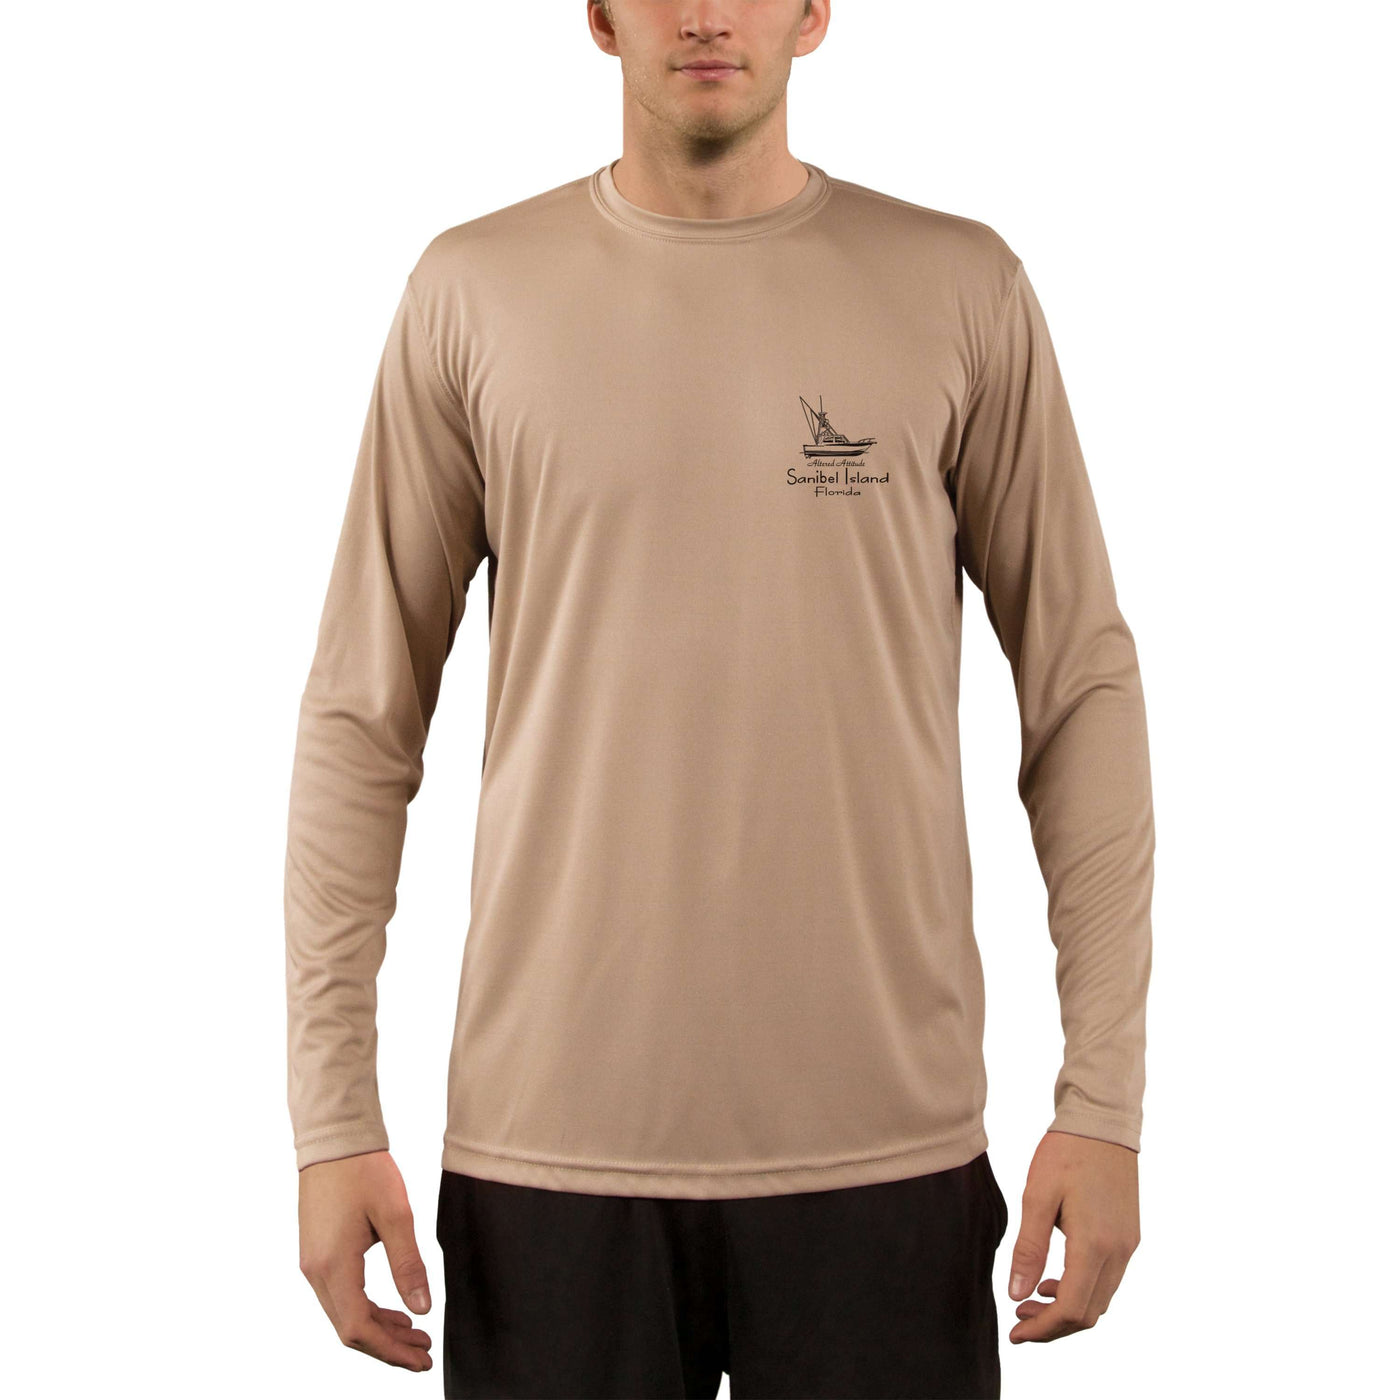 Vintage Destination Sanibel Island Men's UPF 50+ UV Sun Protection Long Sleeve T-Shirt